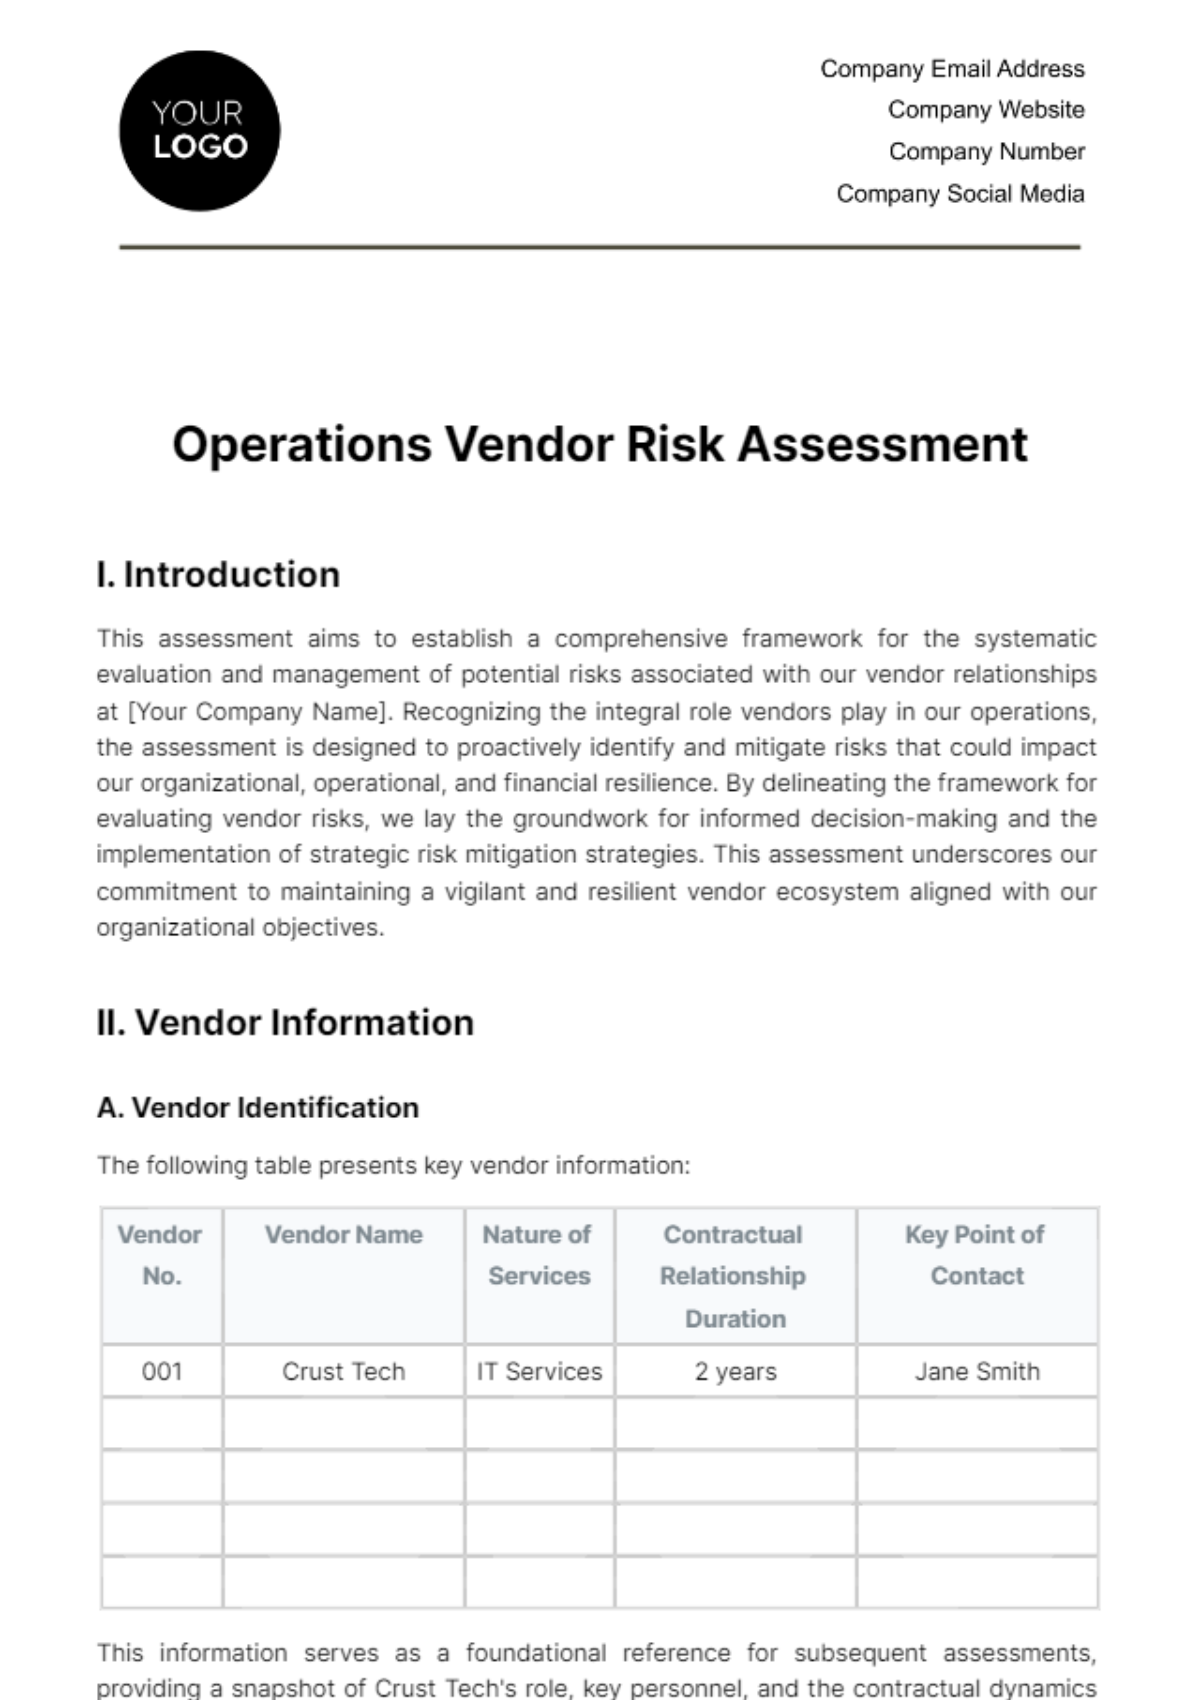 Operations Vendor Risk Assessment Template